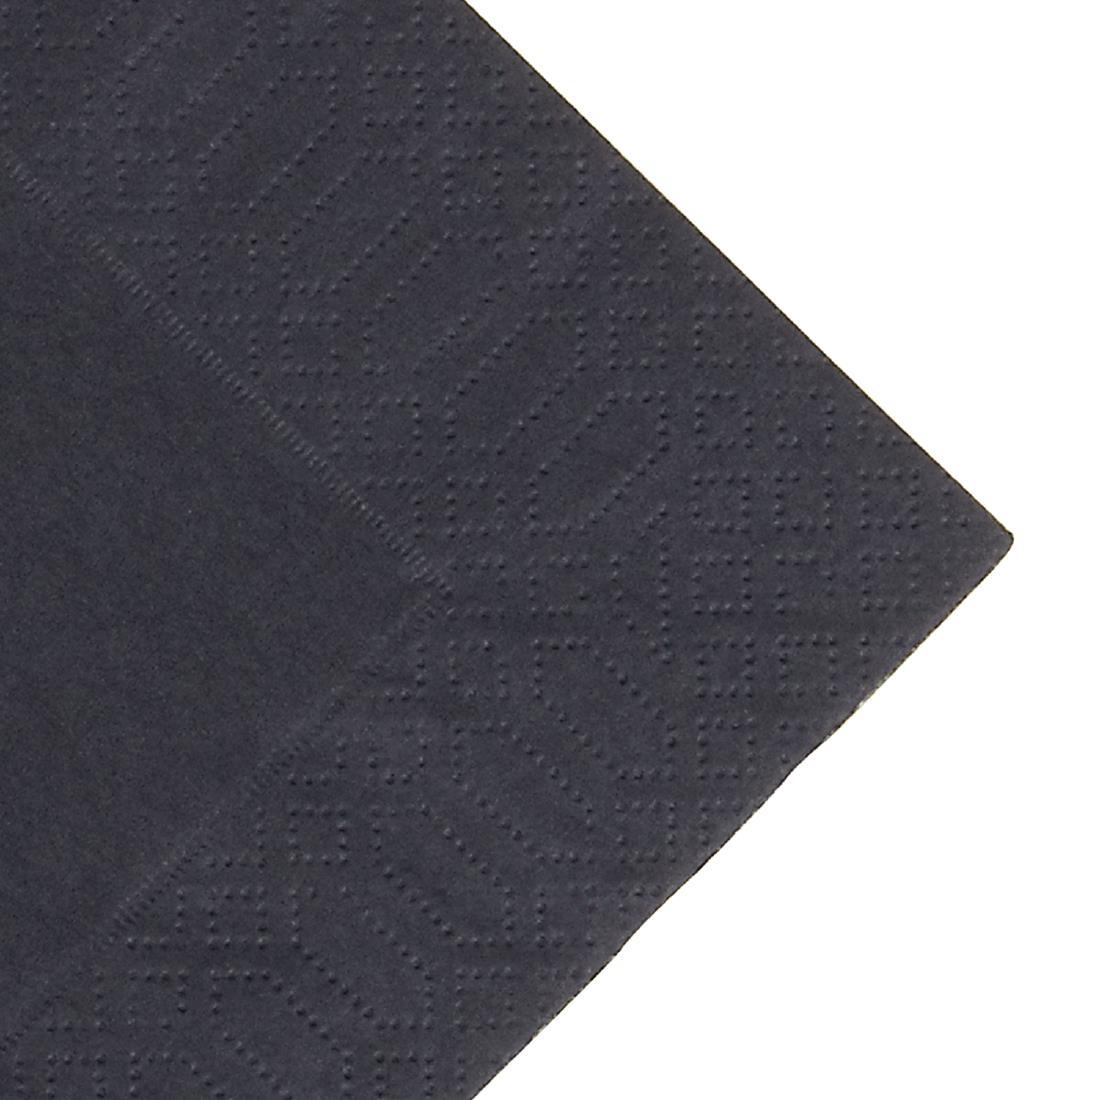 Duni Lunch Napkin Black 33x33cm 3ply 1/4 Fold (Pack of 1000) - GJ107  - 2